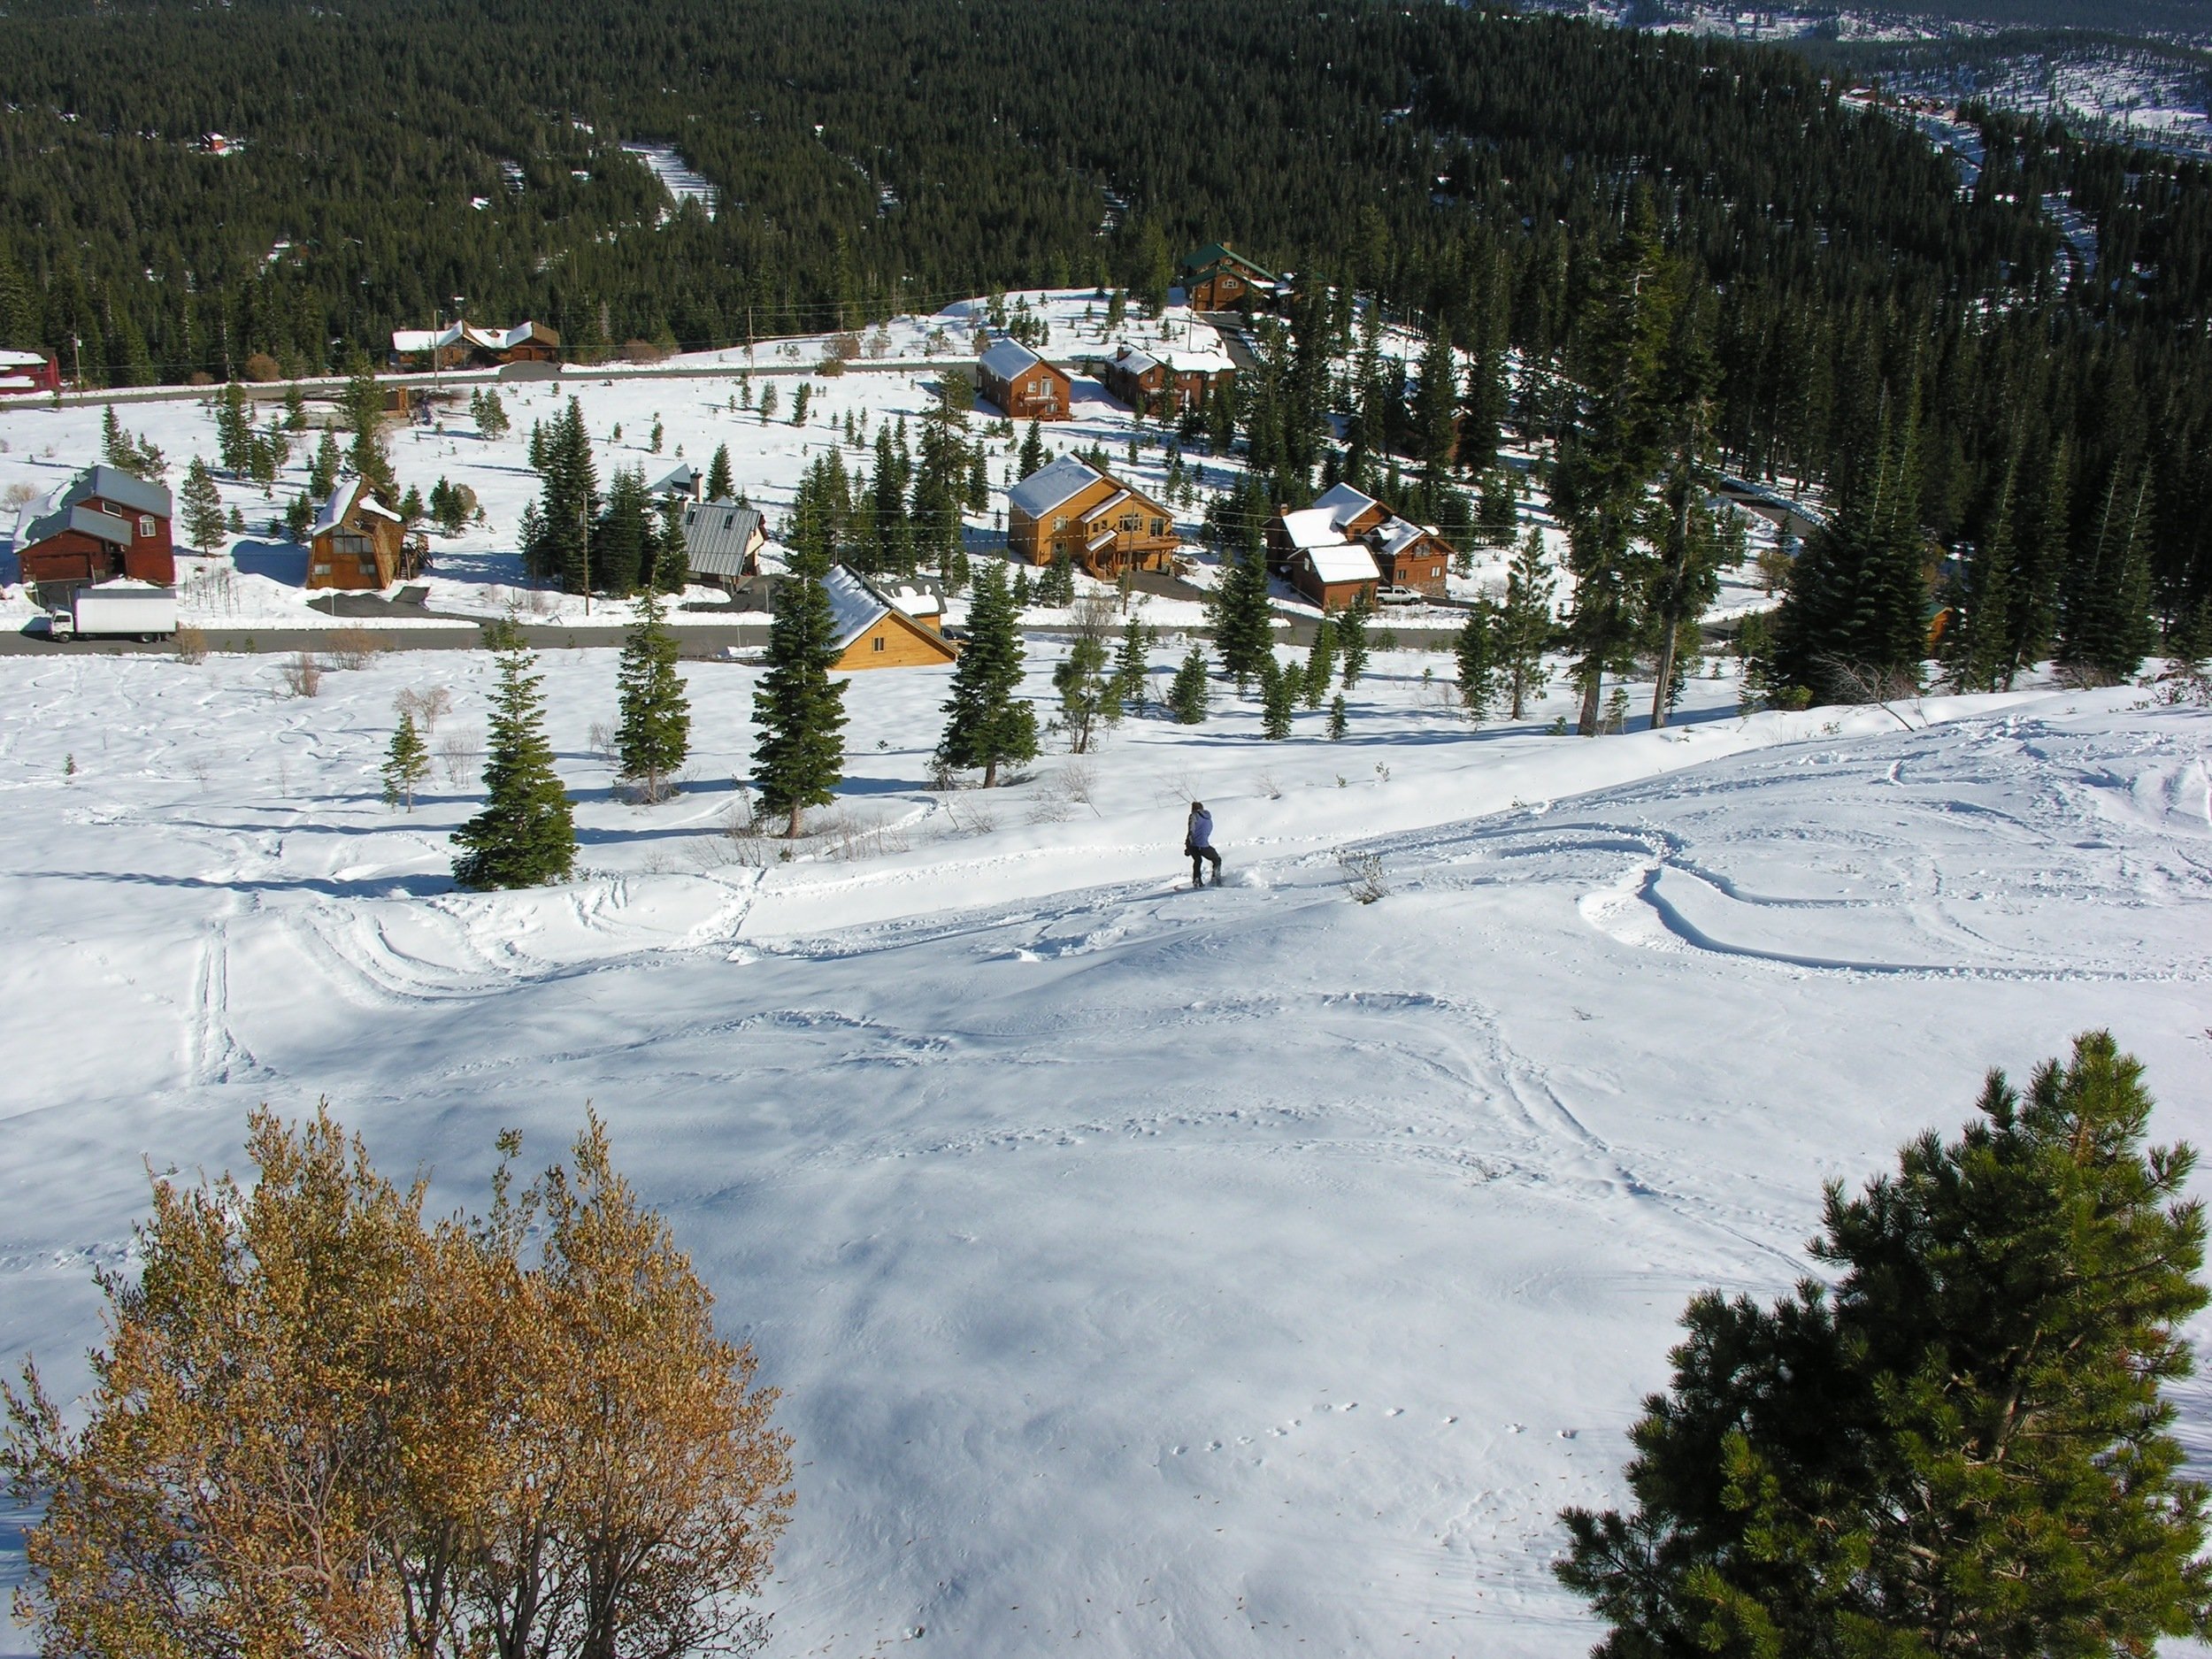 Tahoe-Donner, "privat" (no lift) ski hill in front of Alta Vista Chalet